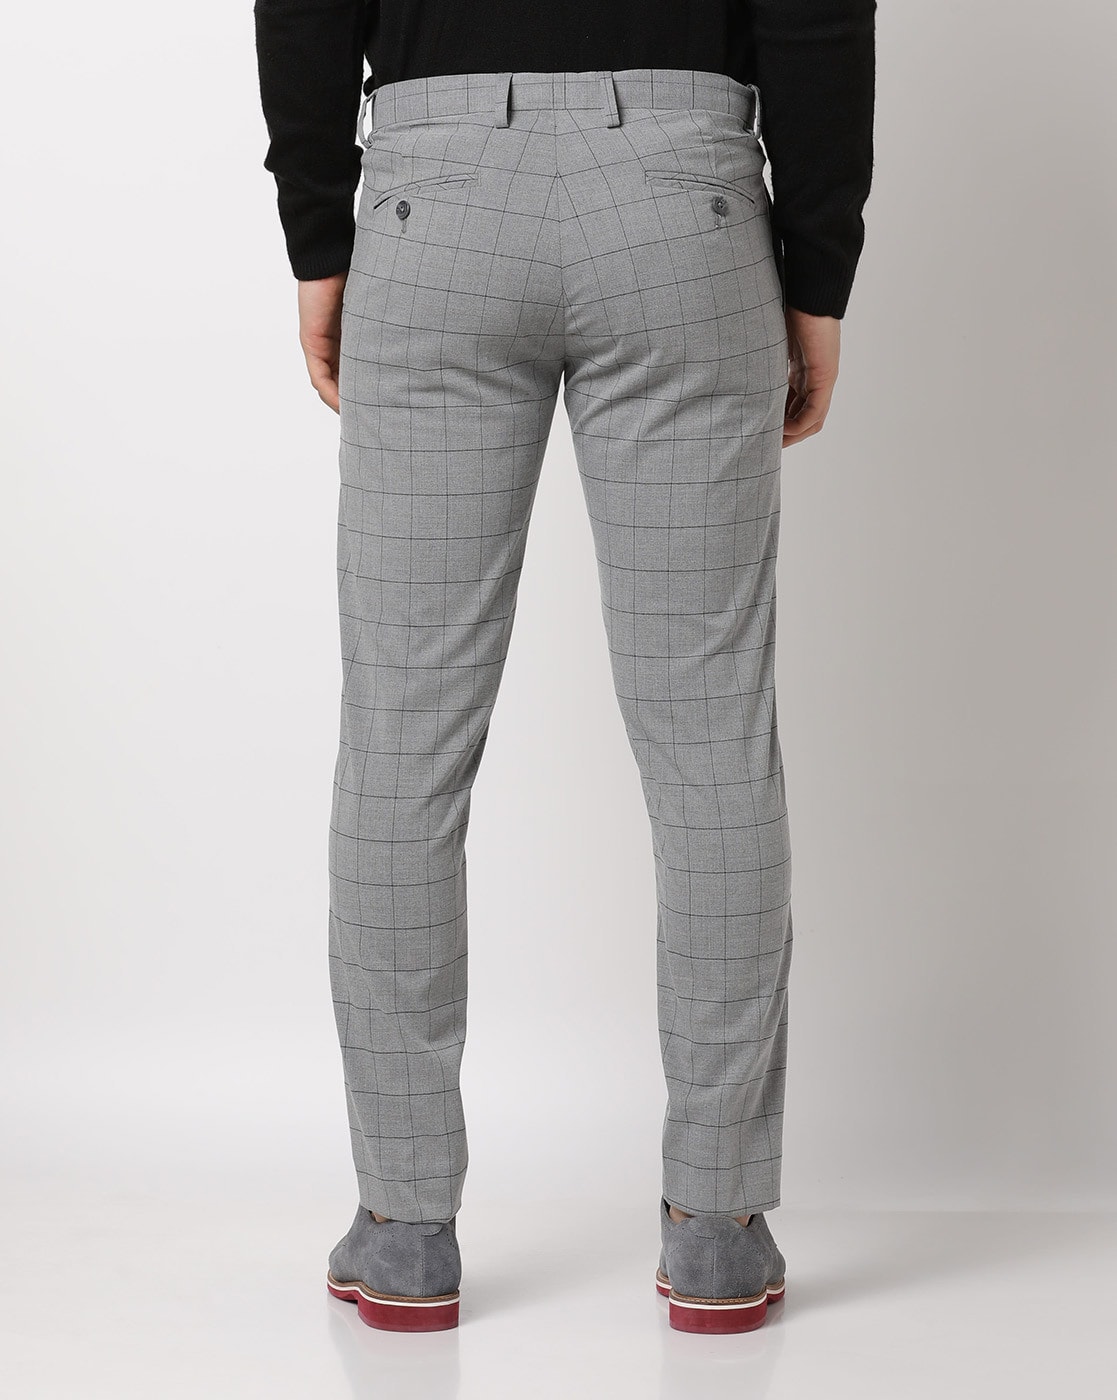 Mens Skinny Plaid Pants Stretch Casual Work Pants Zipper Slim Pencil  Trousers | eBay